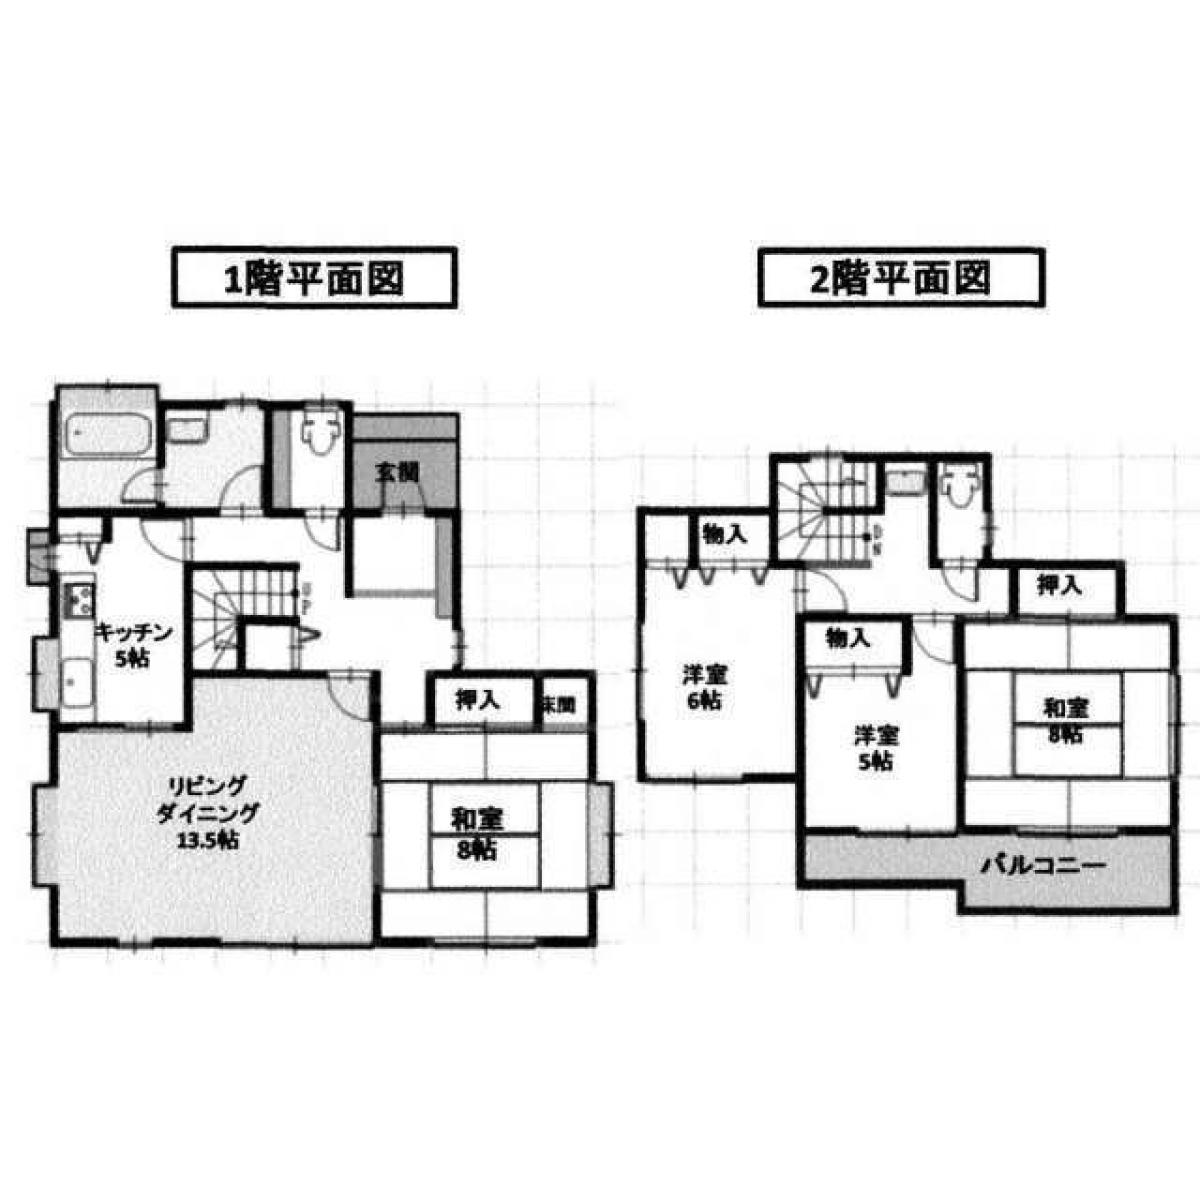 Picture of Home For Sale in Kazo Shi, Saitama, Japan